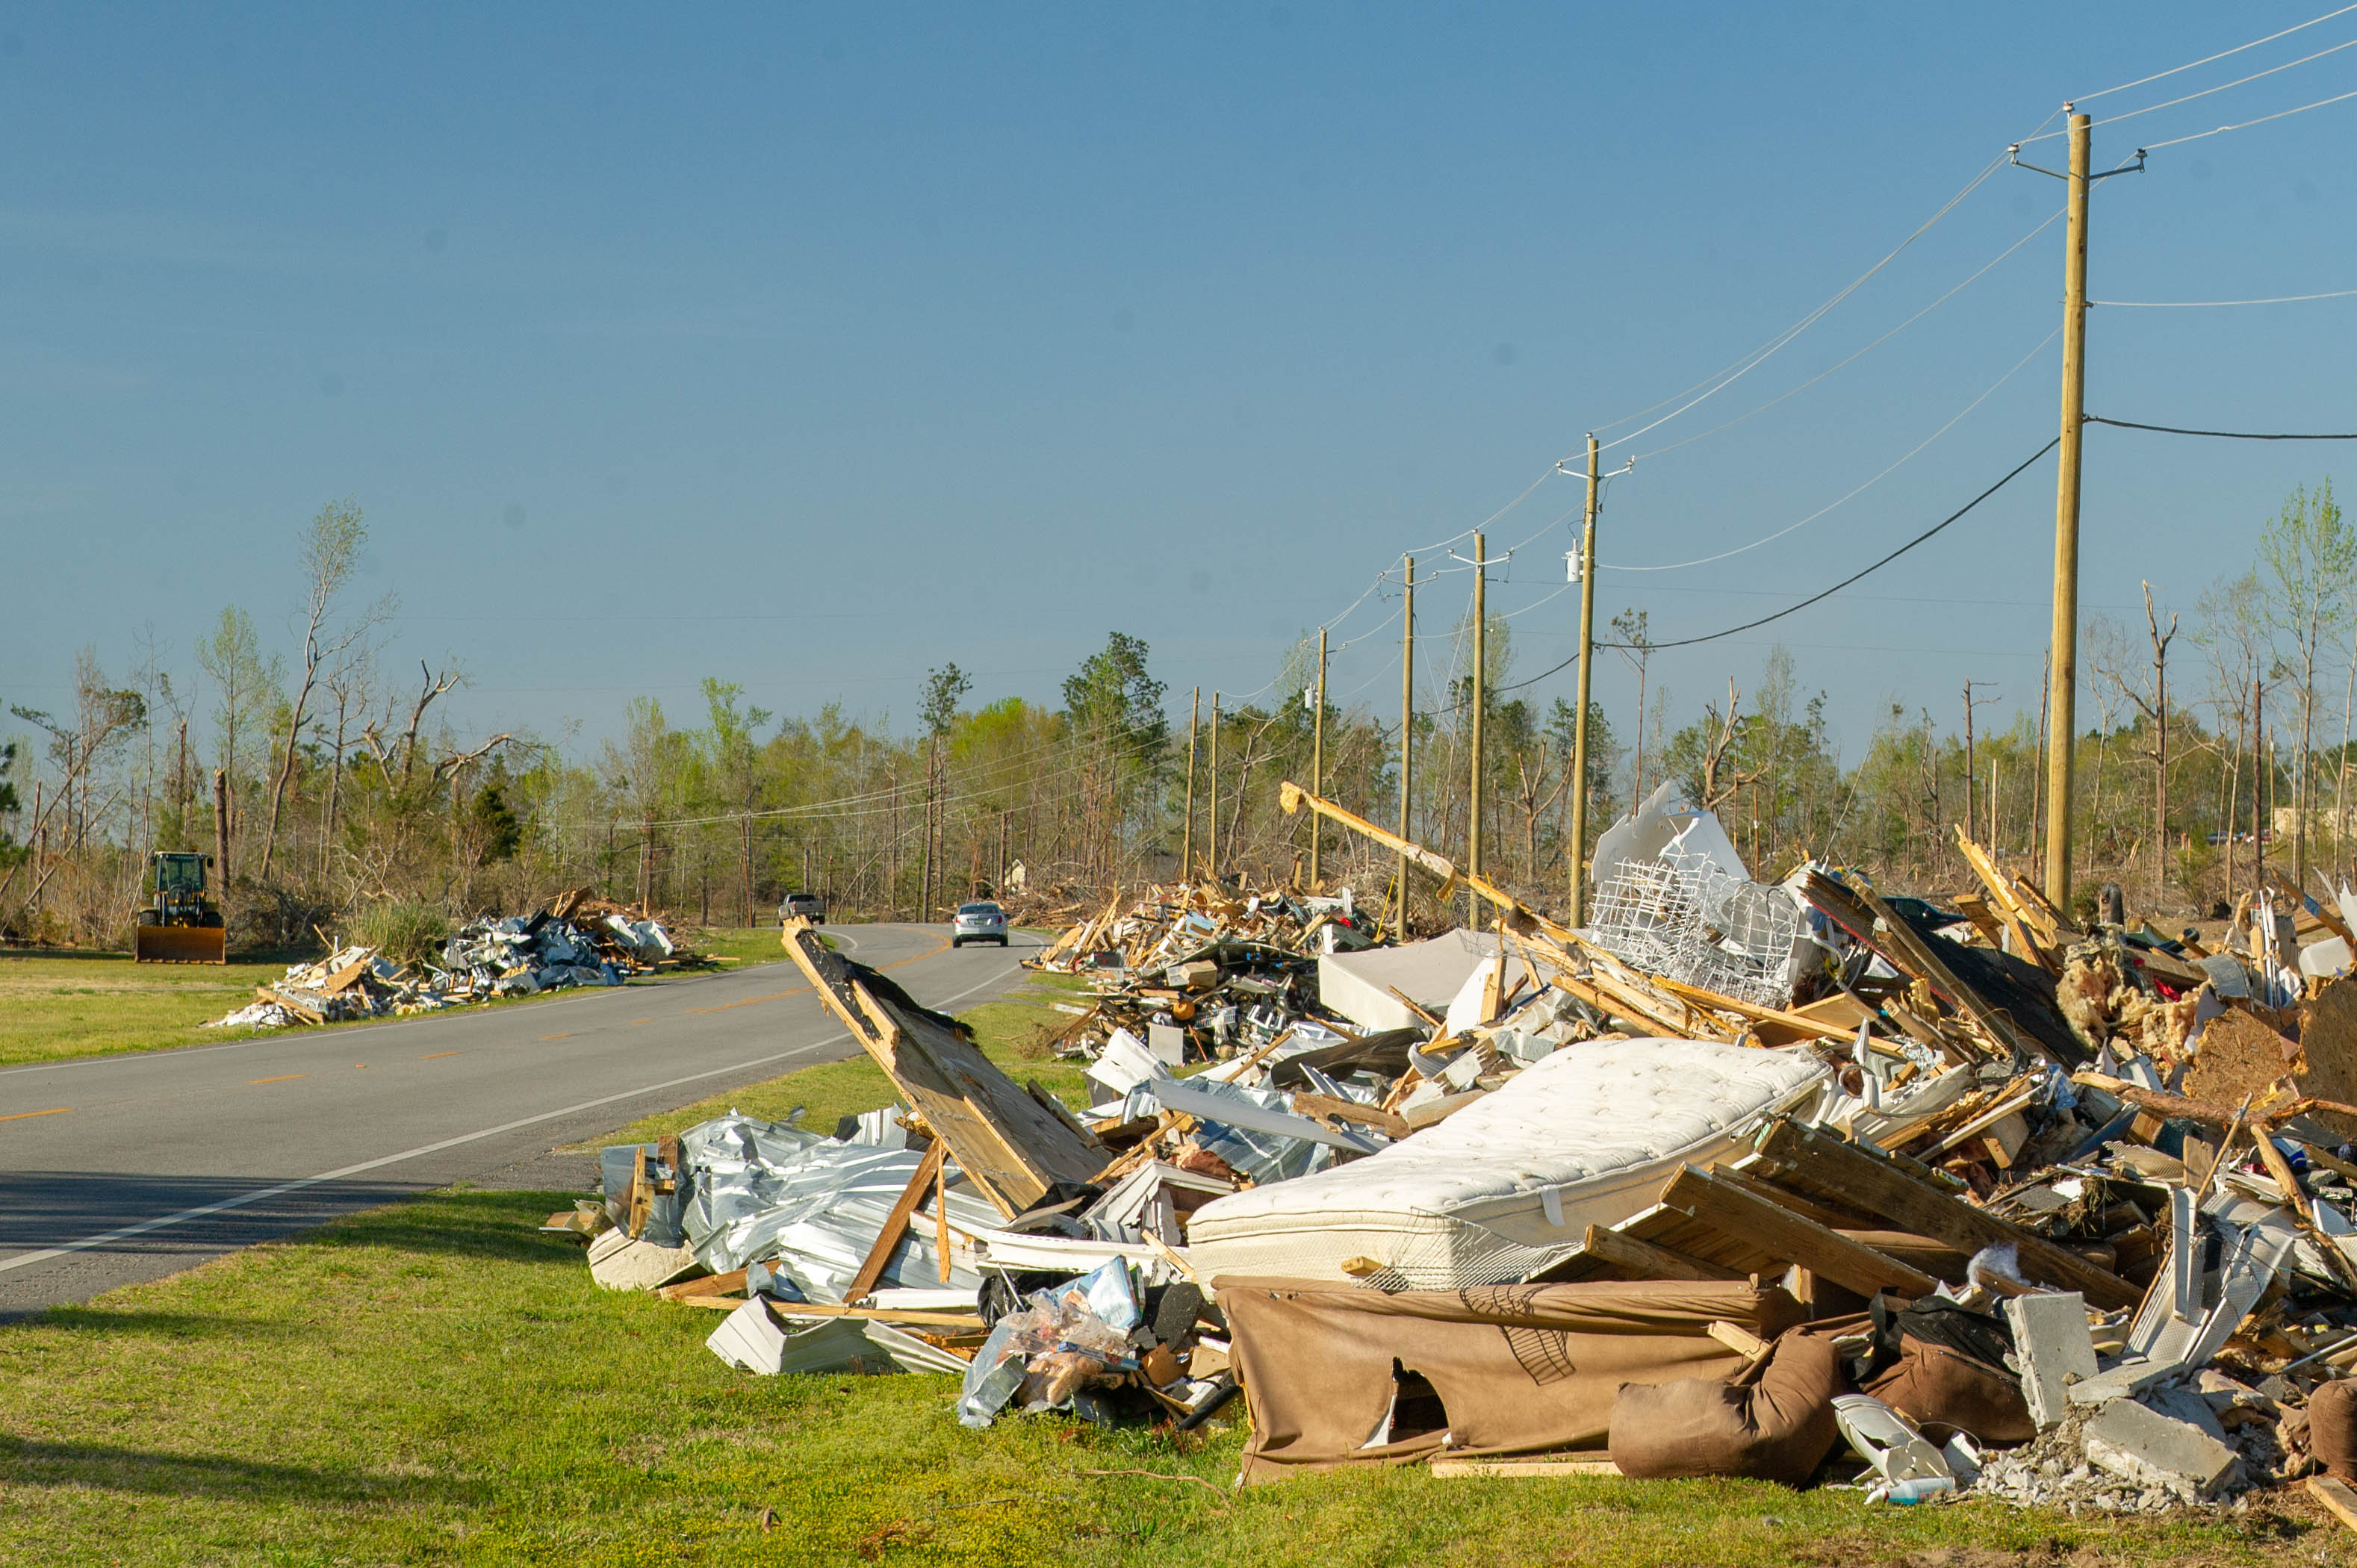 Storm debris removal to resume June 17 for final pickup service